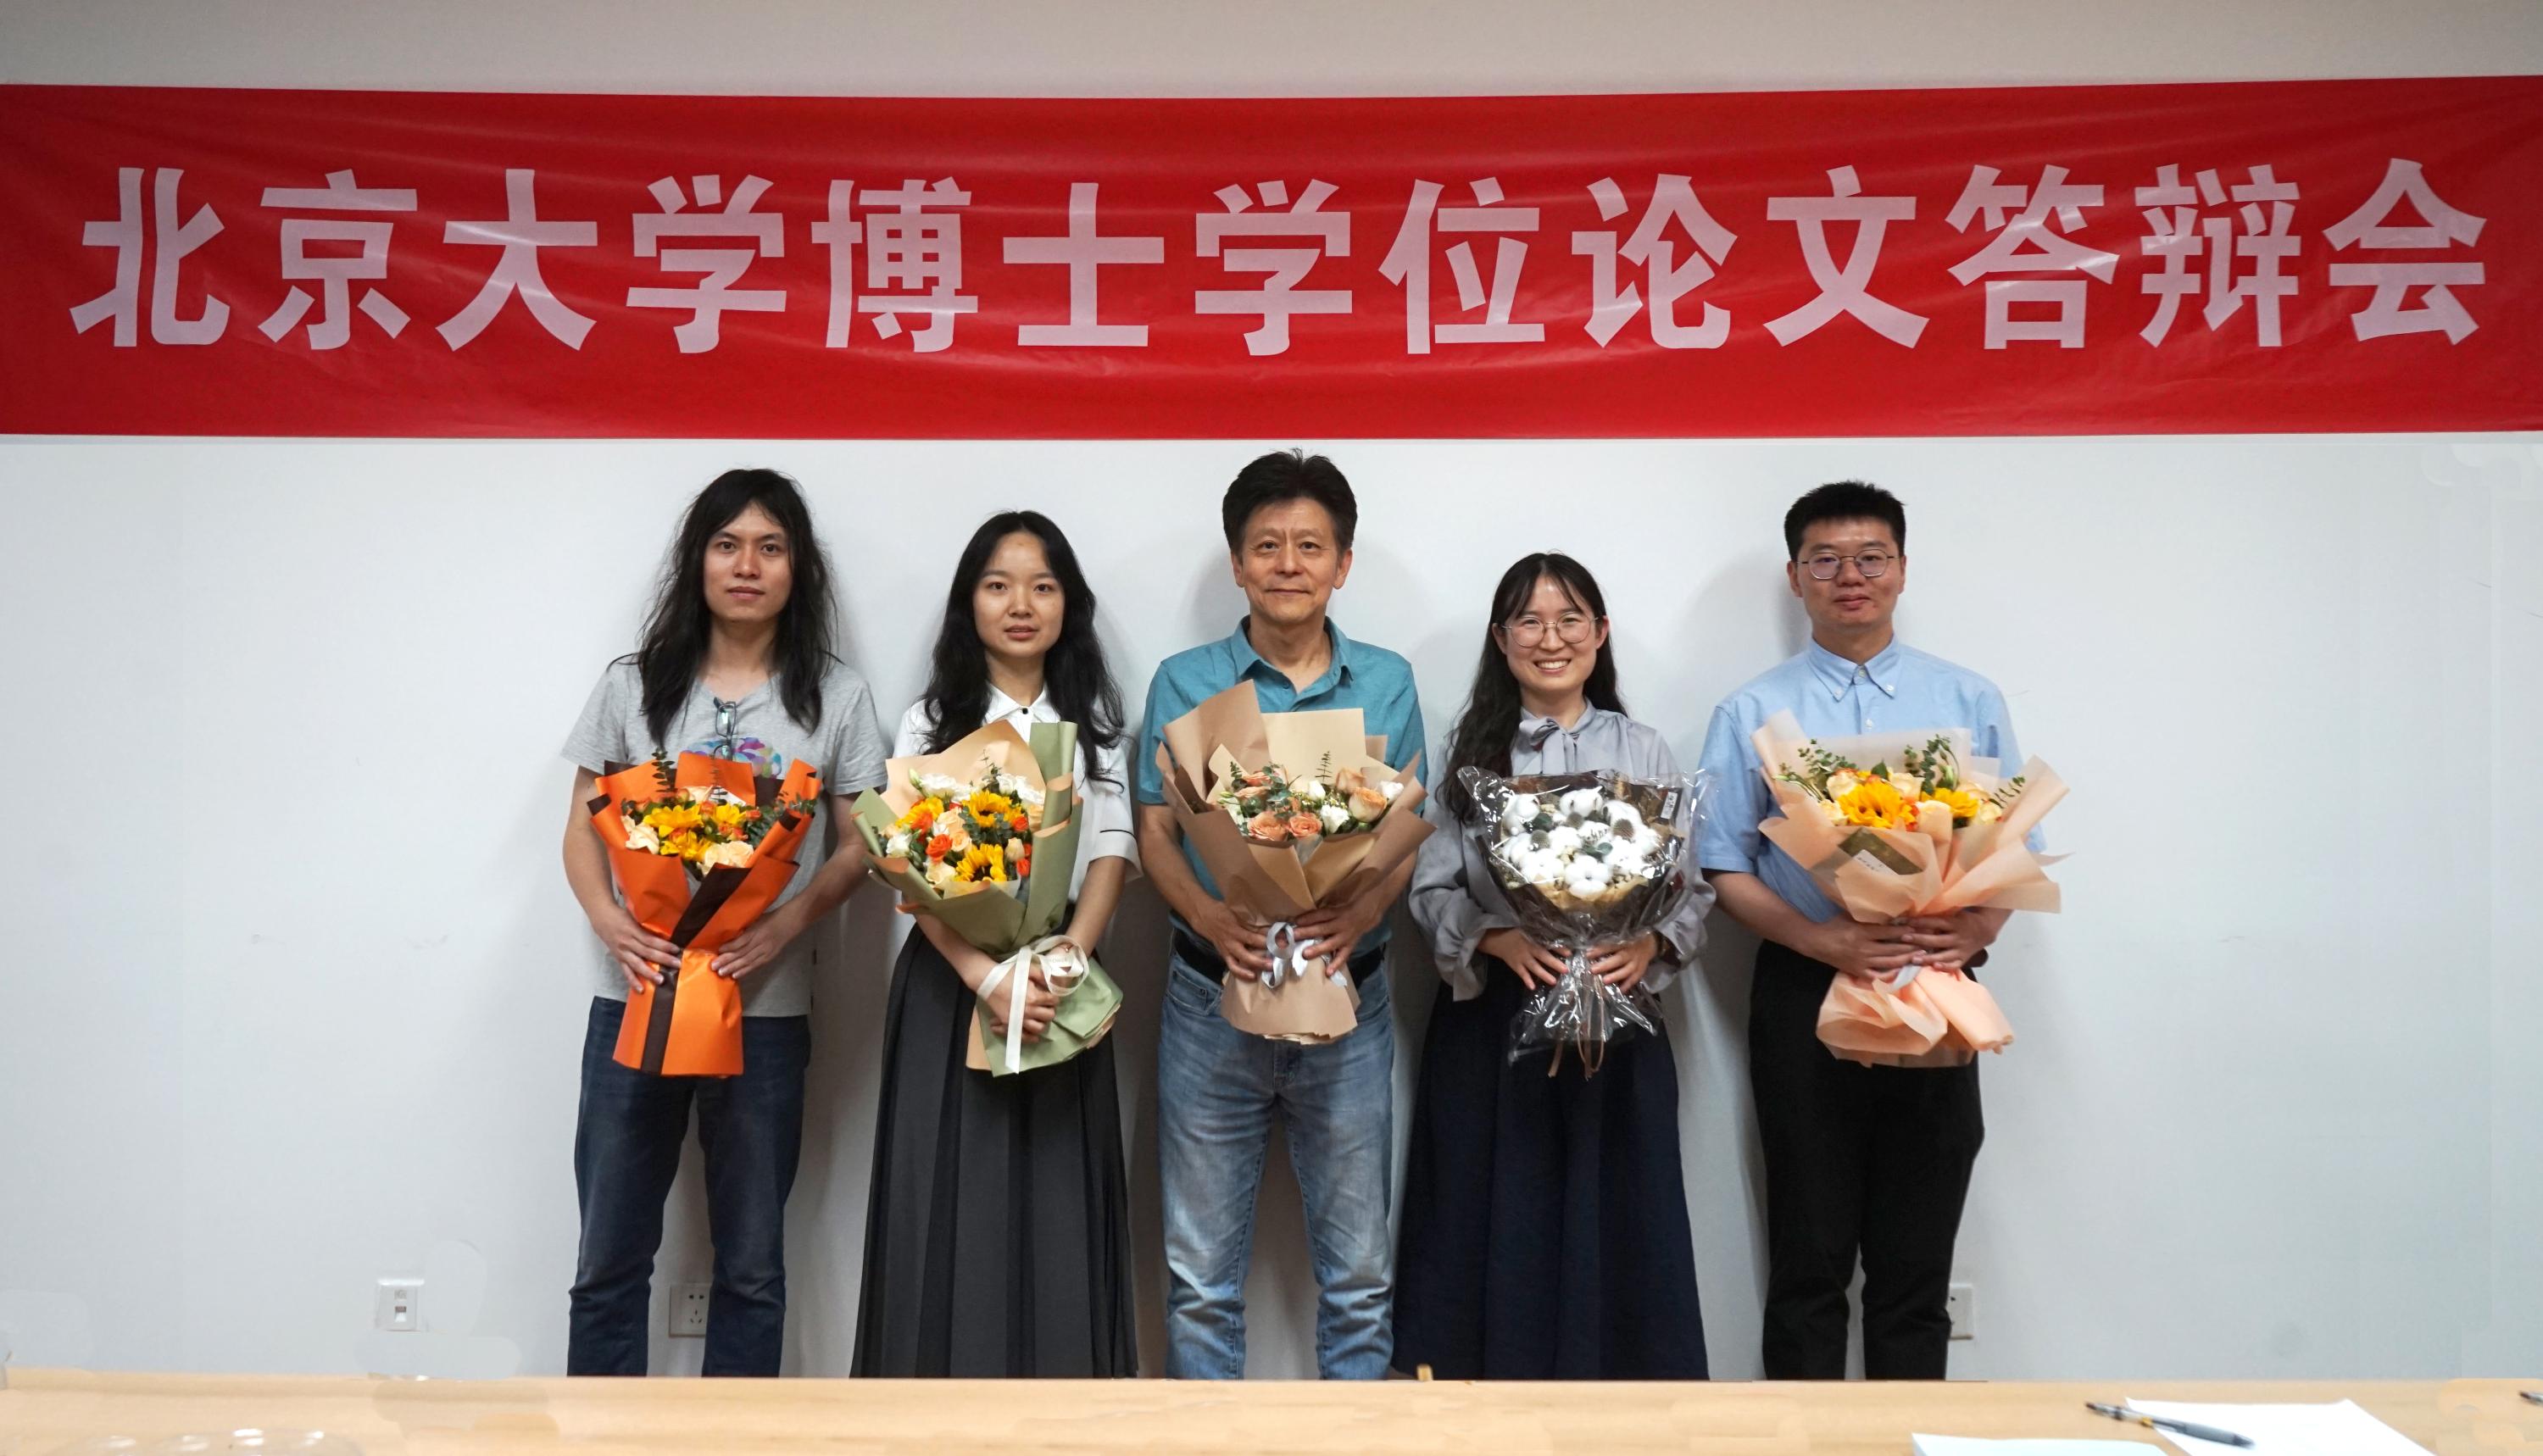 Congratulations to Le Li, Nan Sheng, Ning Yang, and Guoye Guan on successfully passing the doctoral dissertation defense!